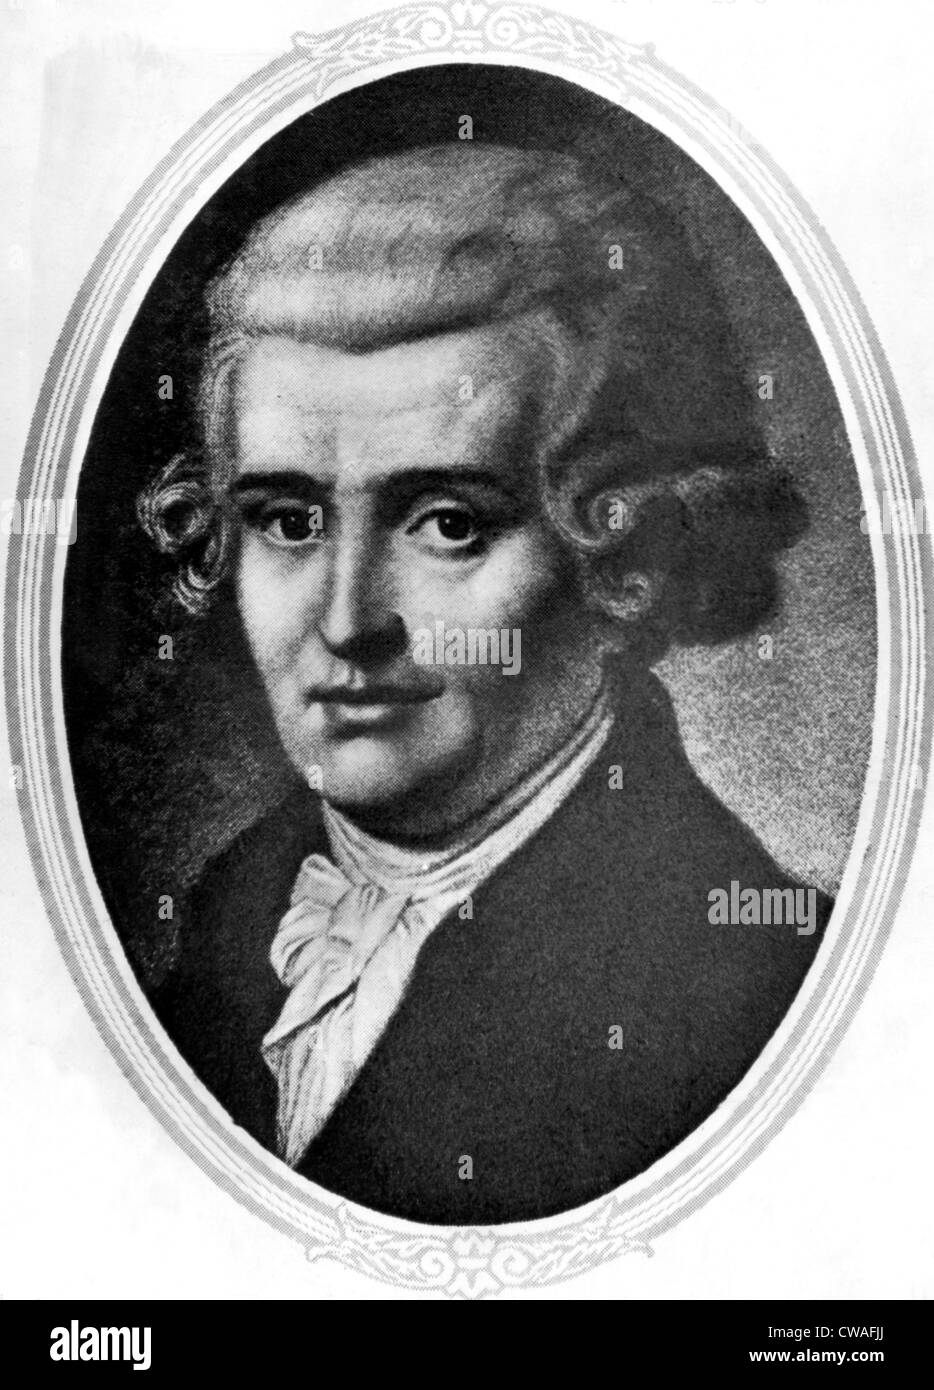 Classical composer Franz Josef Hayden. 1732-1809. Courtesy: CSU Archives/Everett Collection. Stock Photo